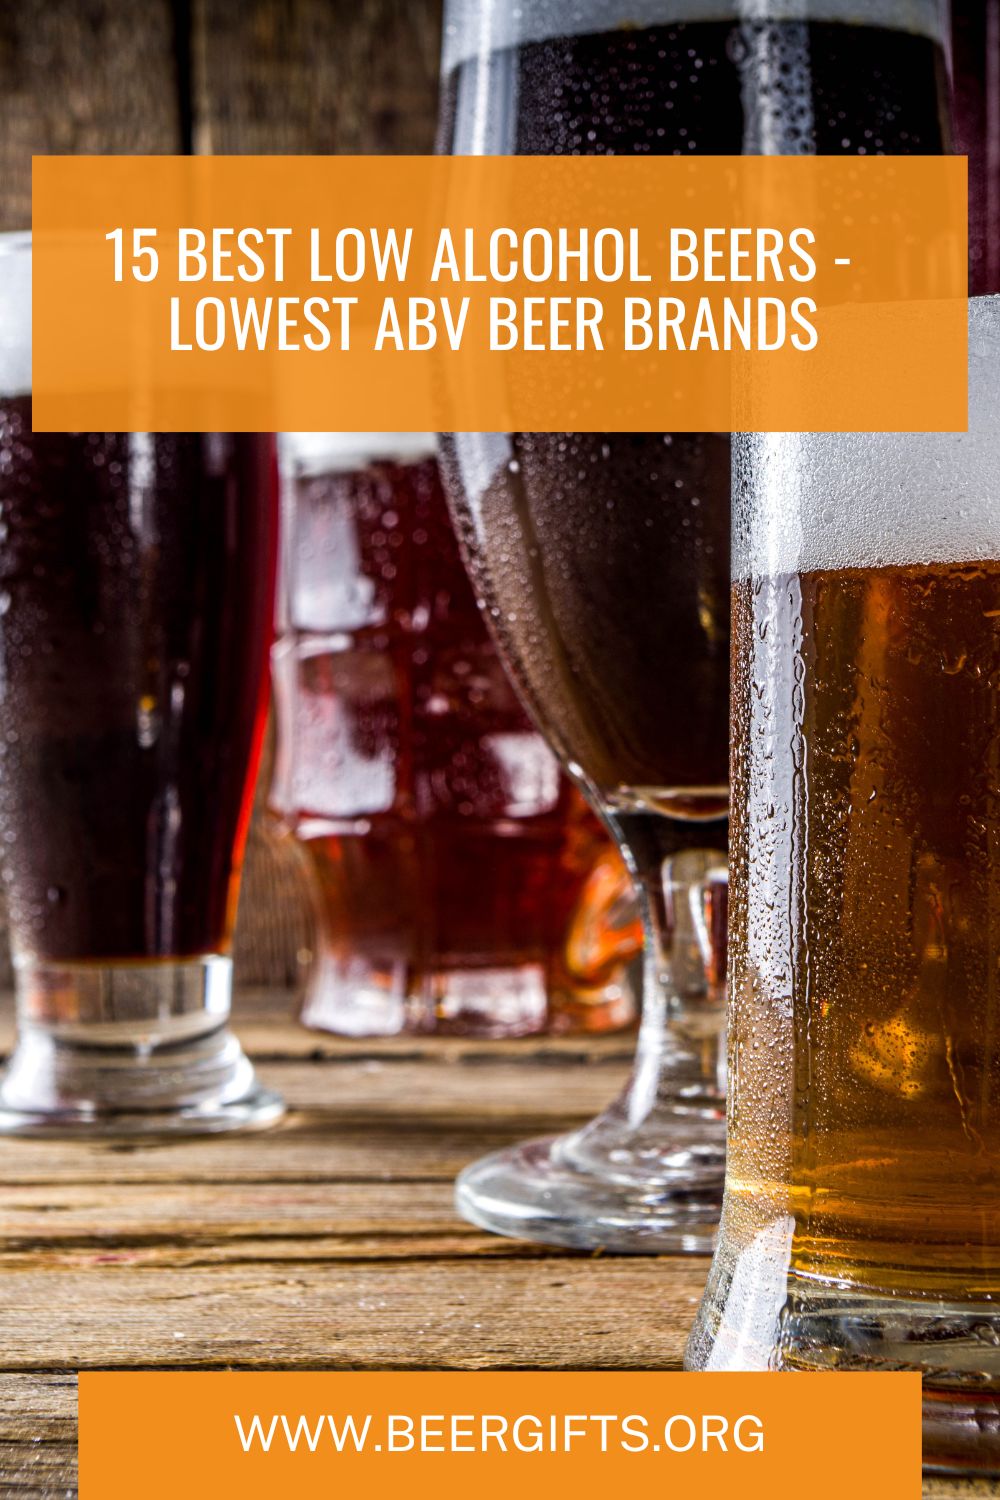 15 Best Low Alcohol Beers - Lowest ABV Beer Brands14